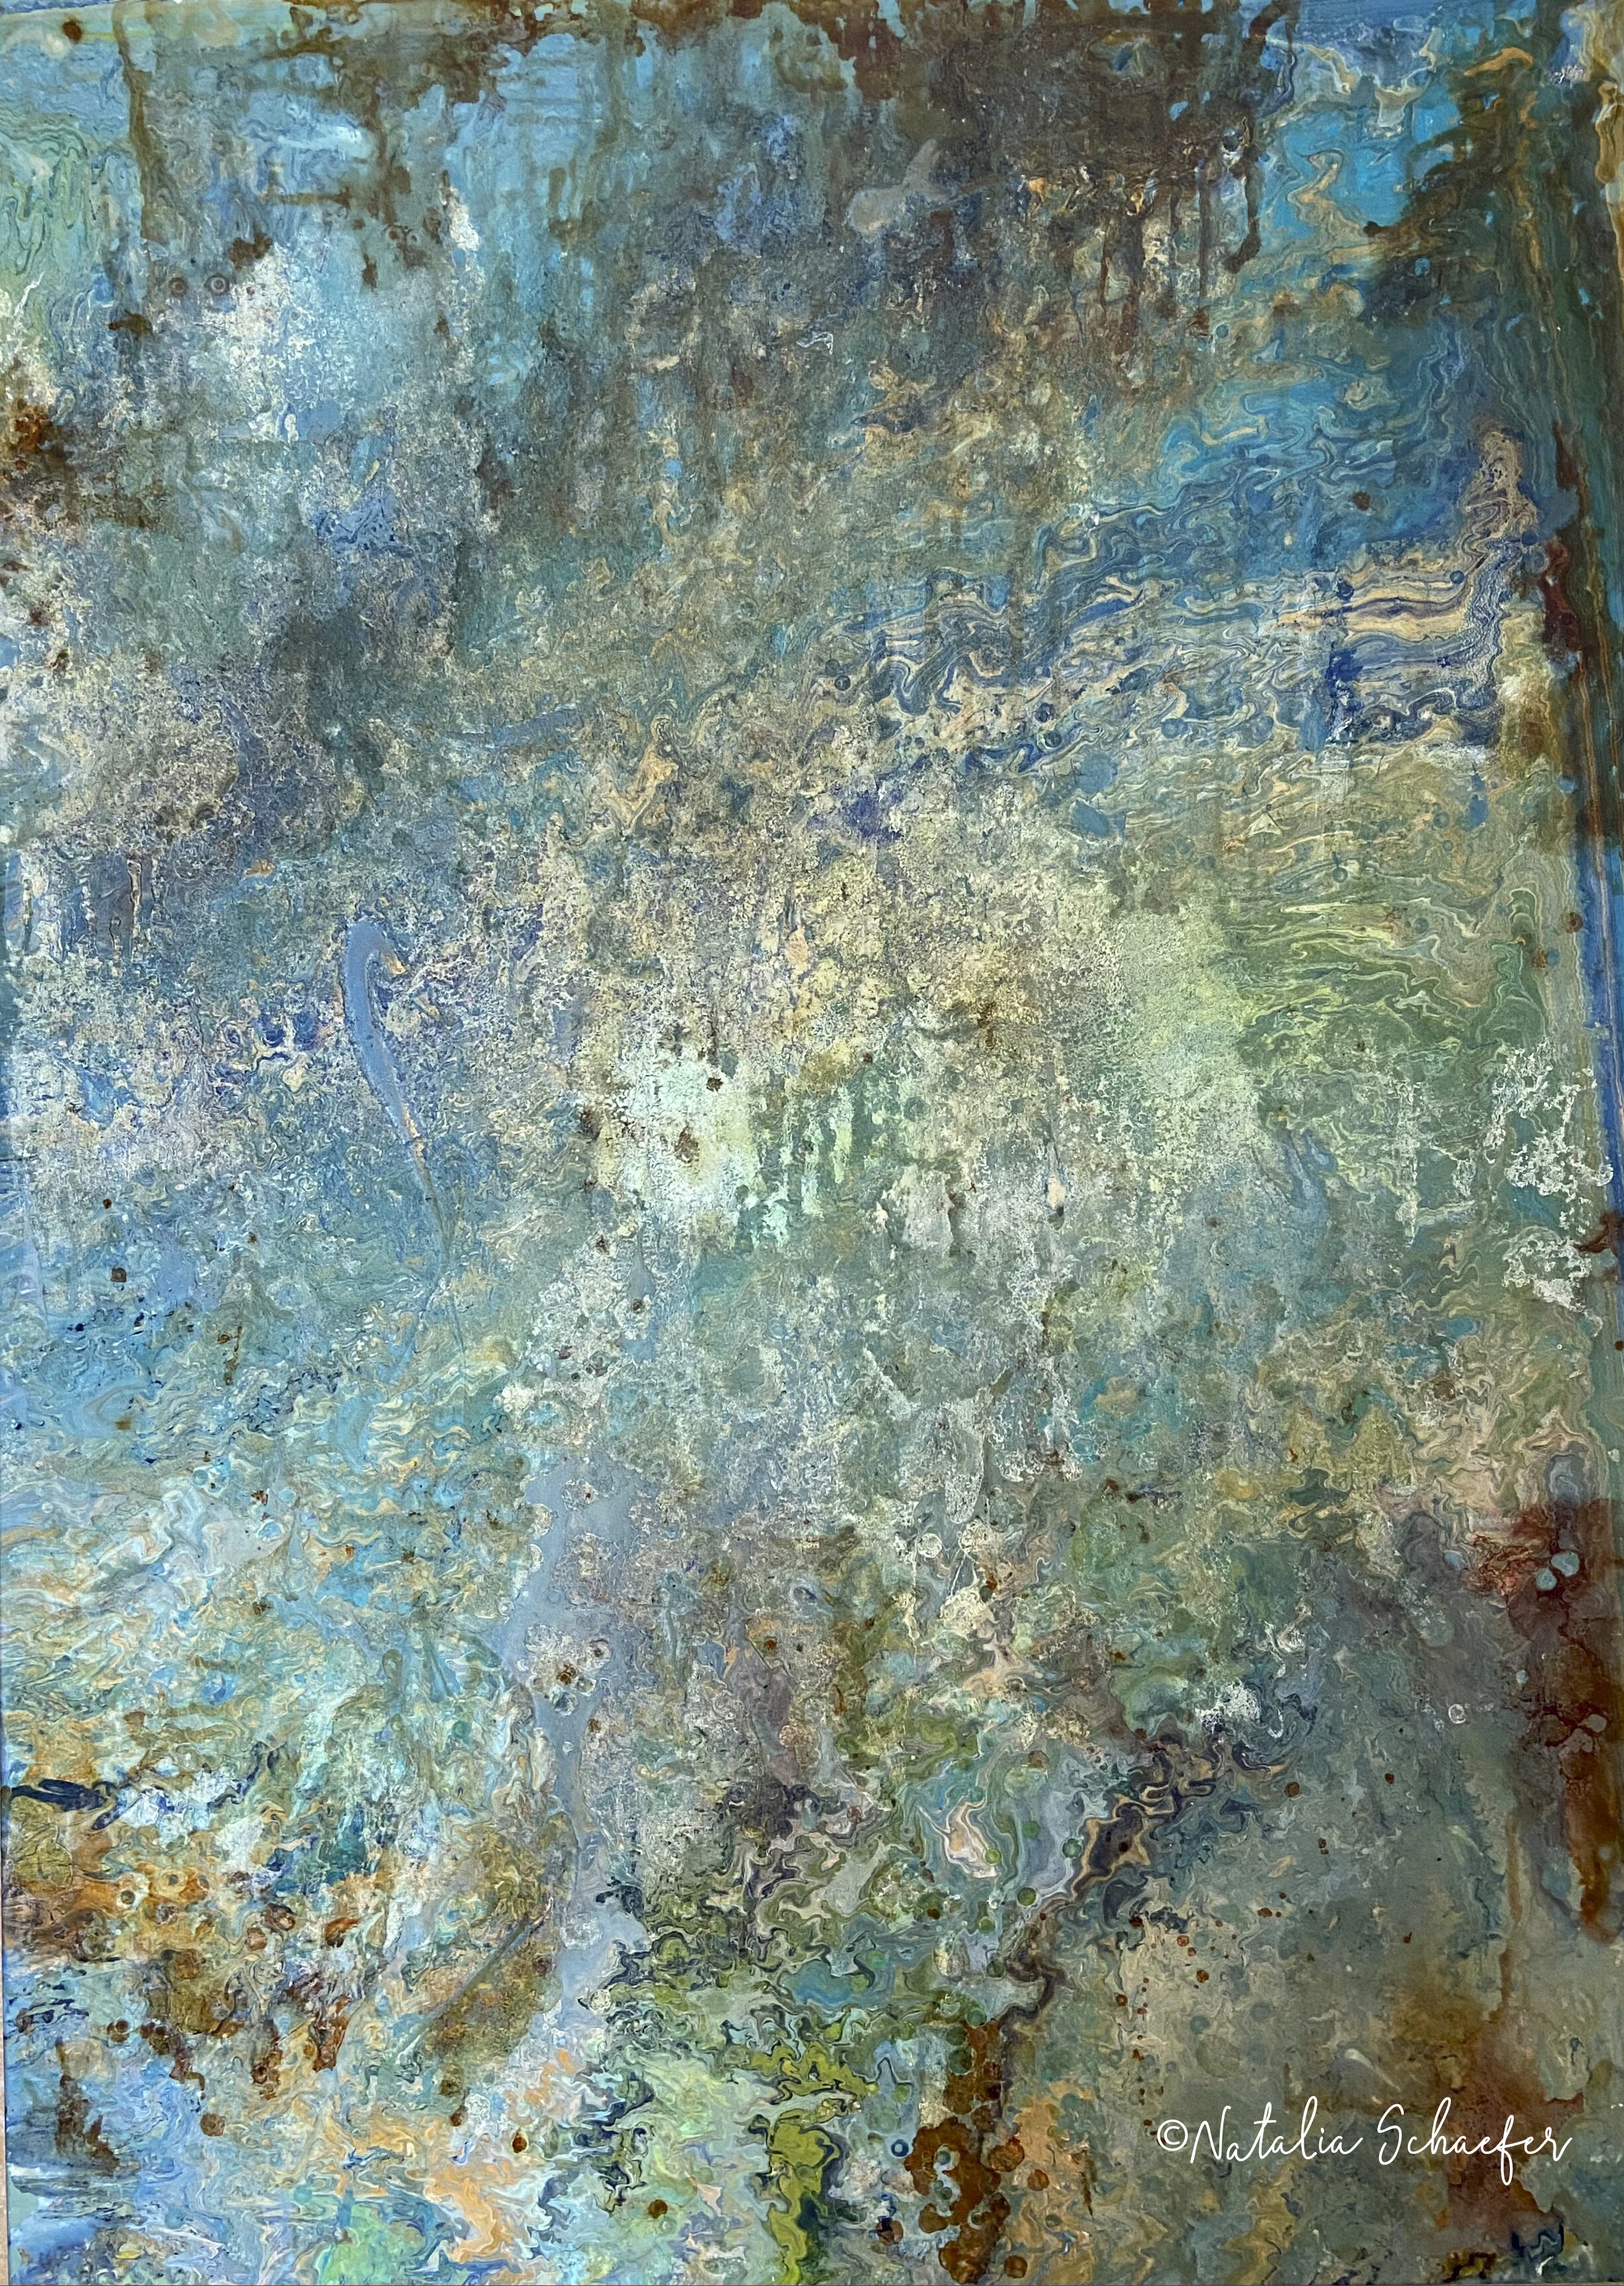 Follow the flow - Undertow / mixed media on canvas / 100 x 140 cm